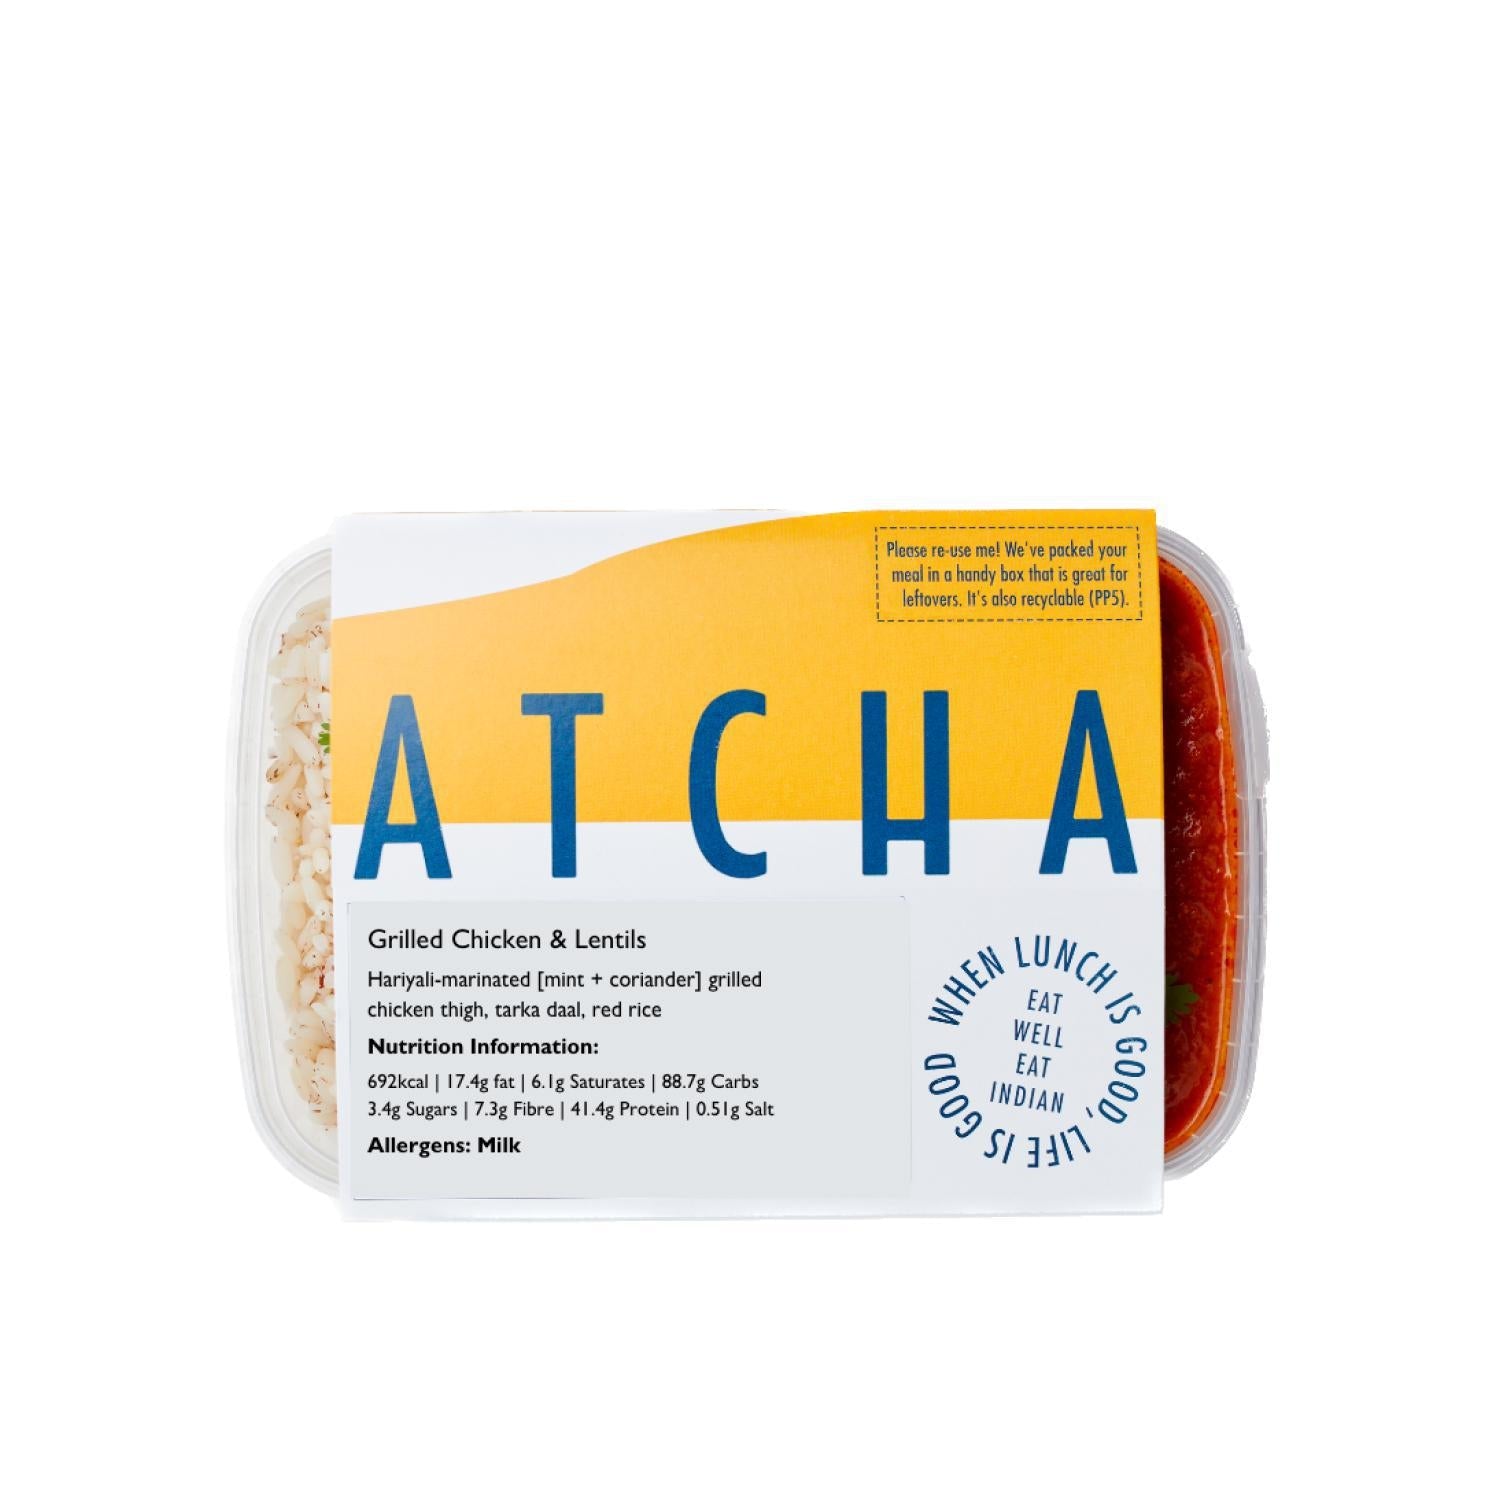 ATCHA - Grilled Chicken & Lentils